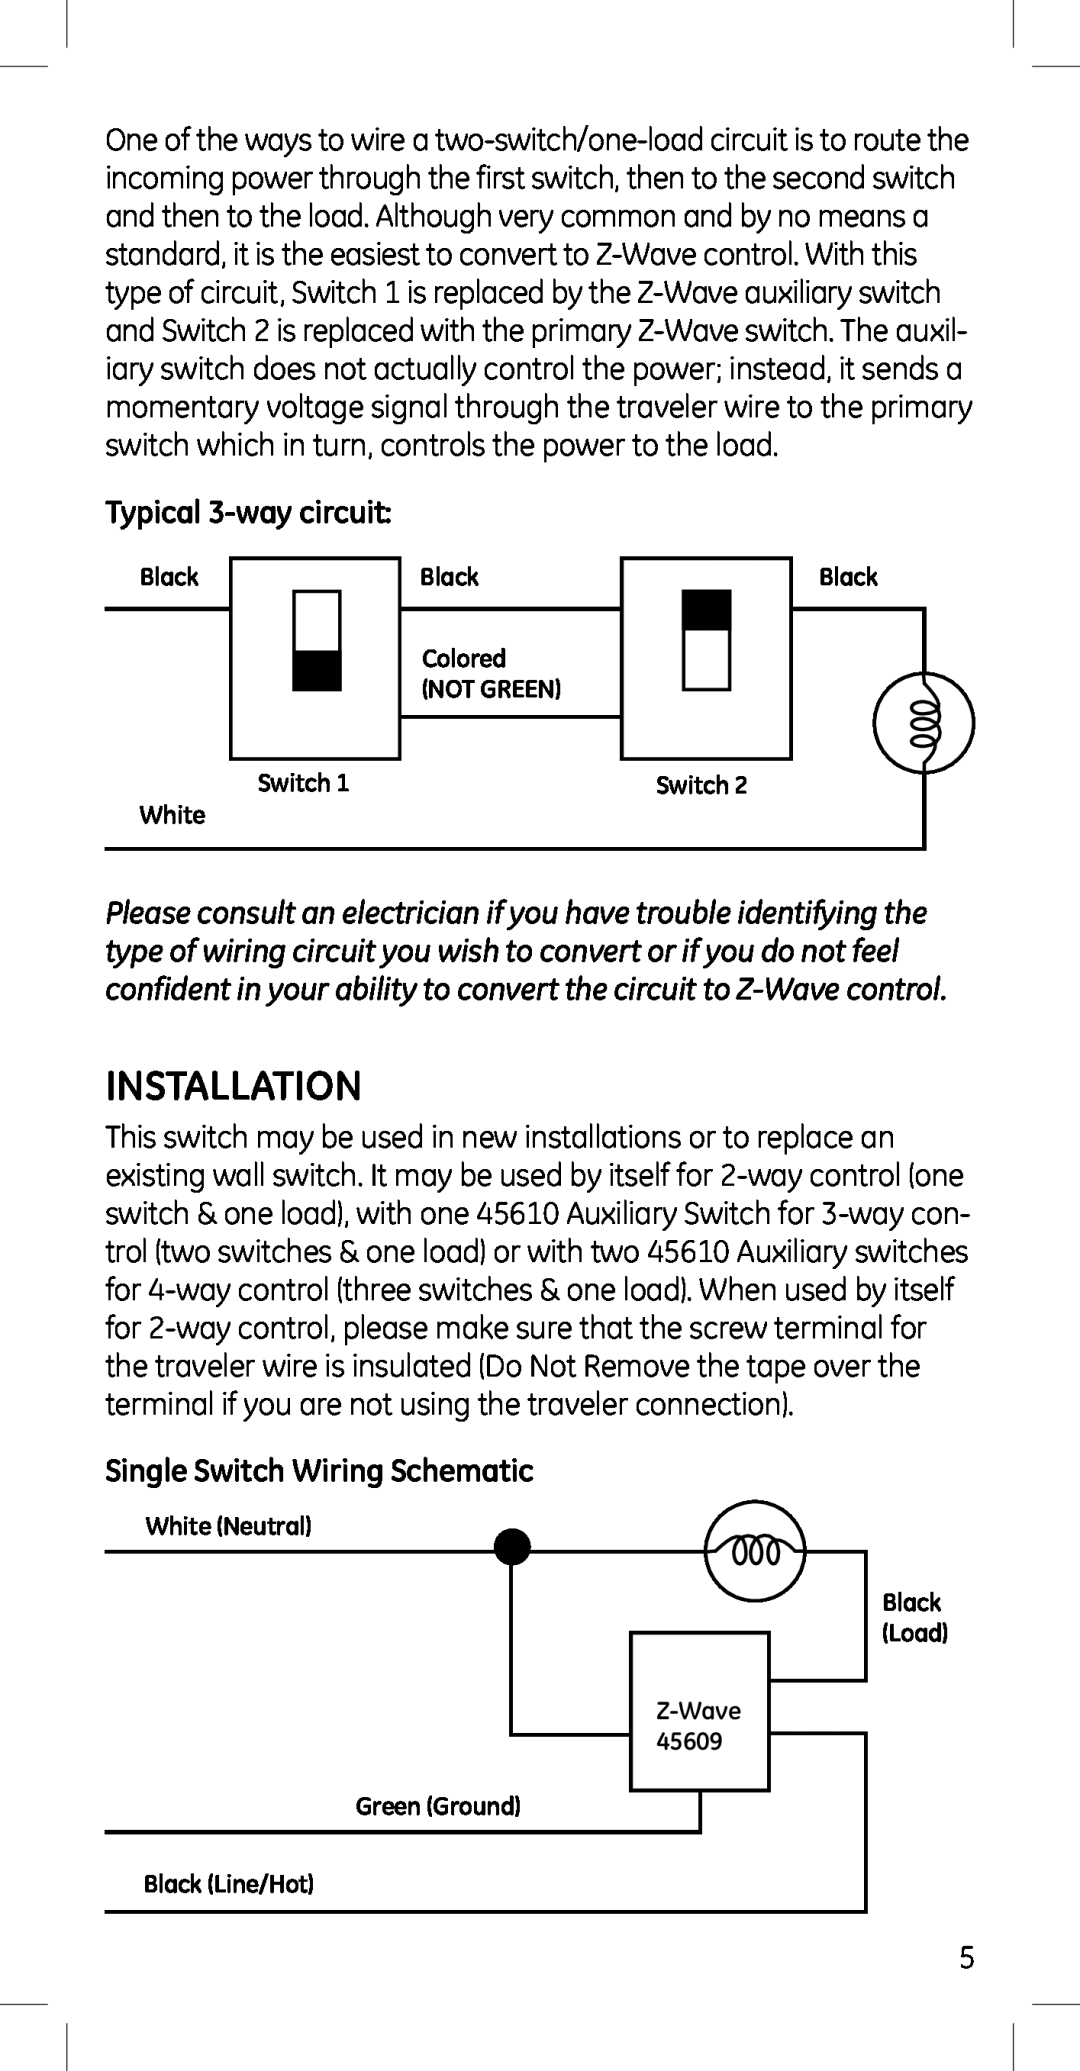 Jasco 45609 manual Installation, Single Switch Wiring Schematic, Typical 3-waycircuit 